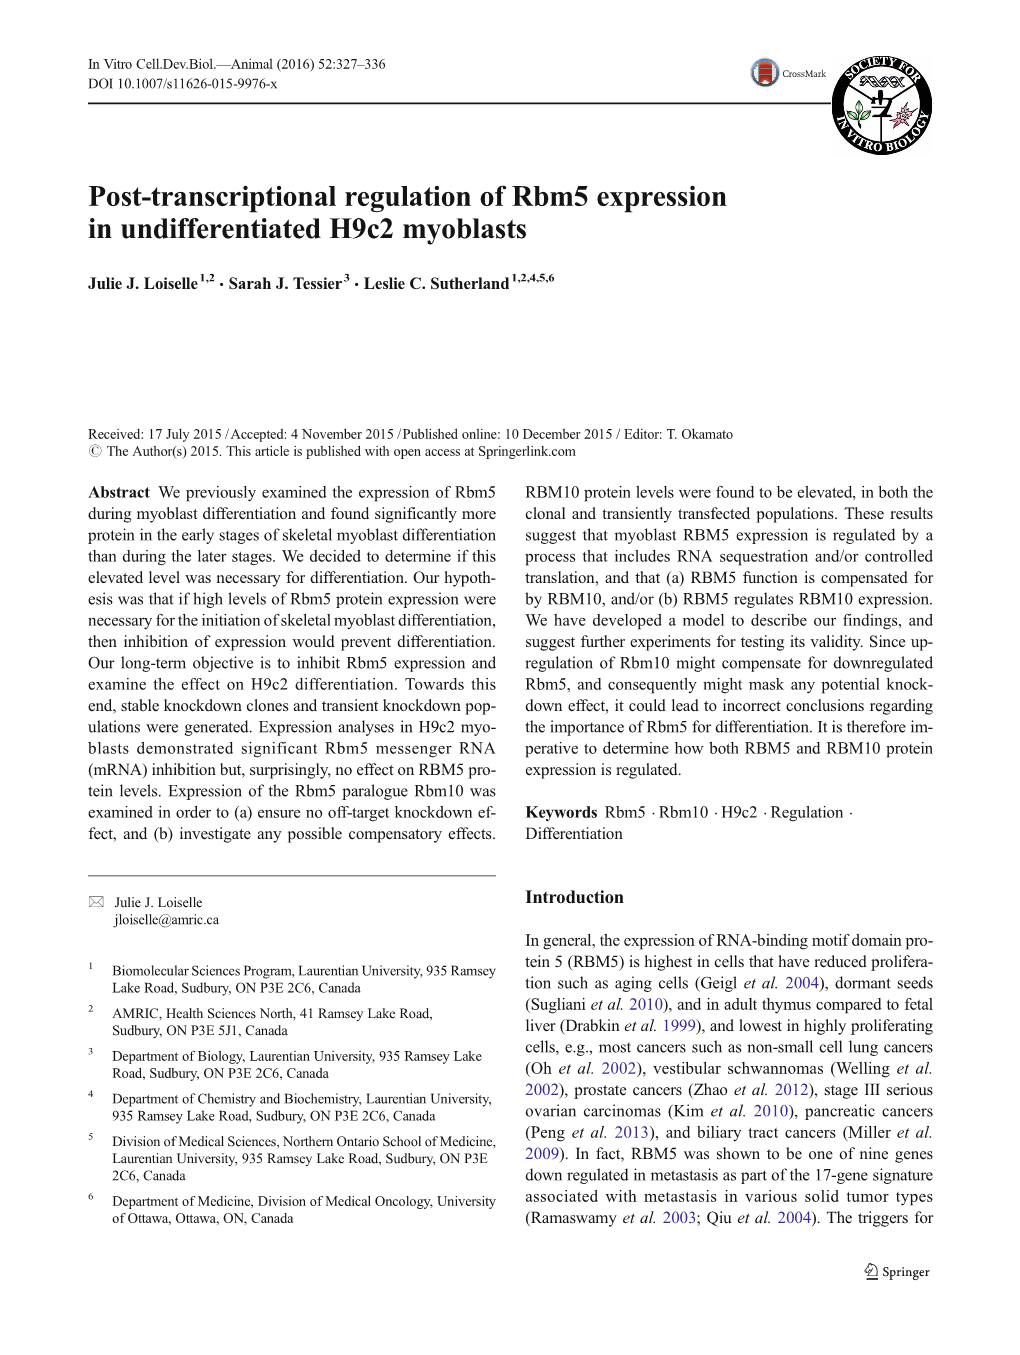 Post-Transcriptional Regulation of Rbm5 Expression in Undifferentiated H9c2 Myoblasts